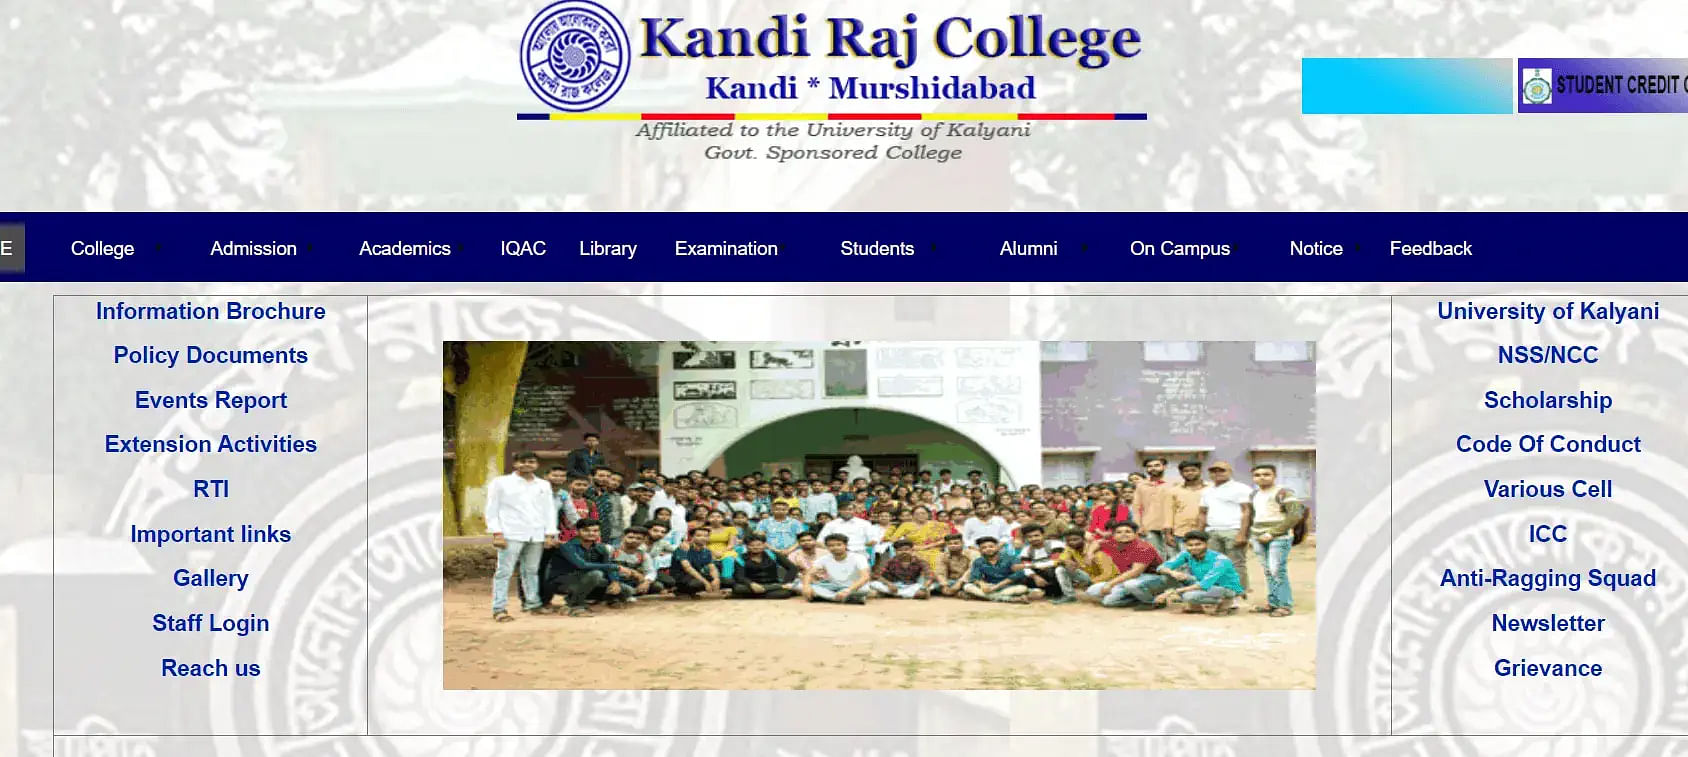 Kandi Raj College